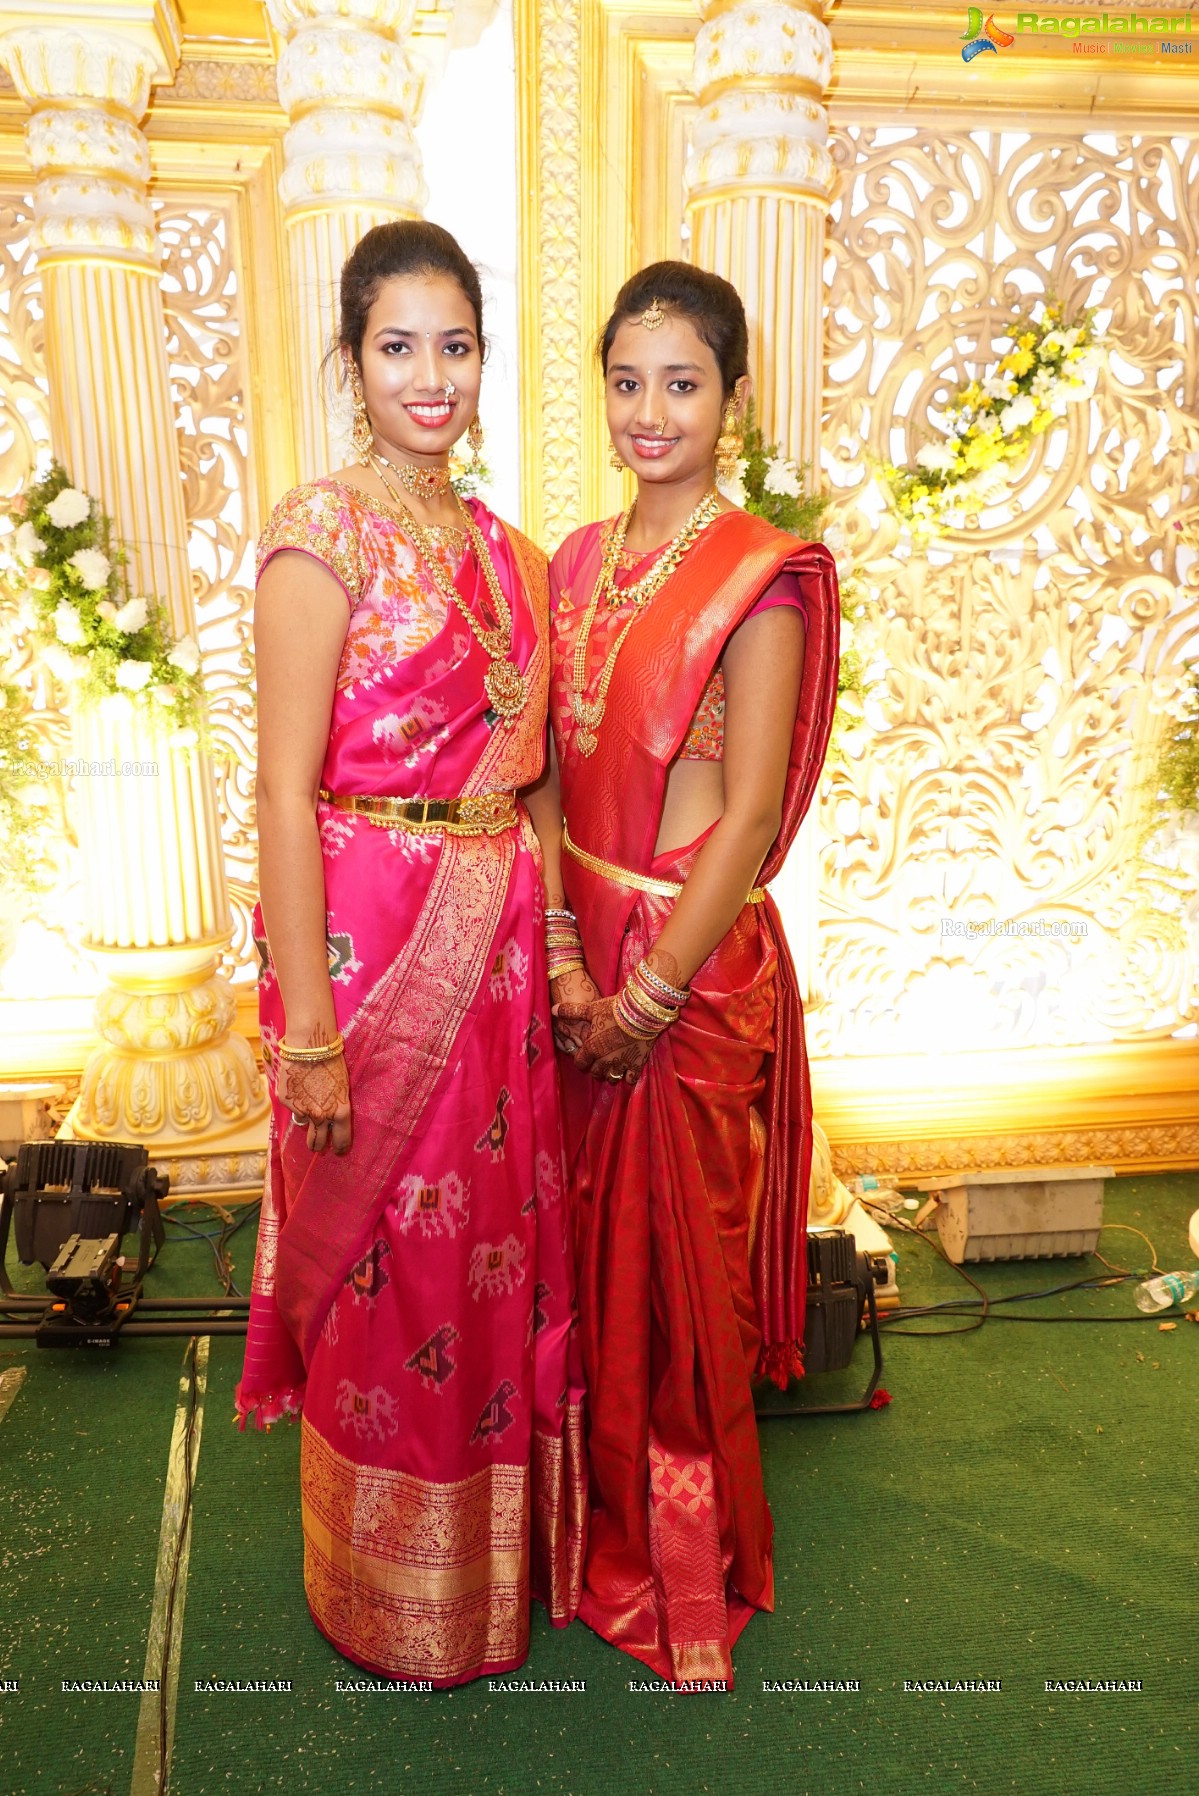 Grand Wedding of Sanjay and Divya at Imperial Gardens, Hyderabad